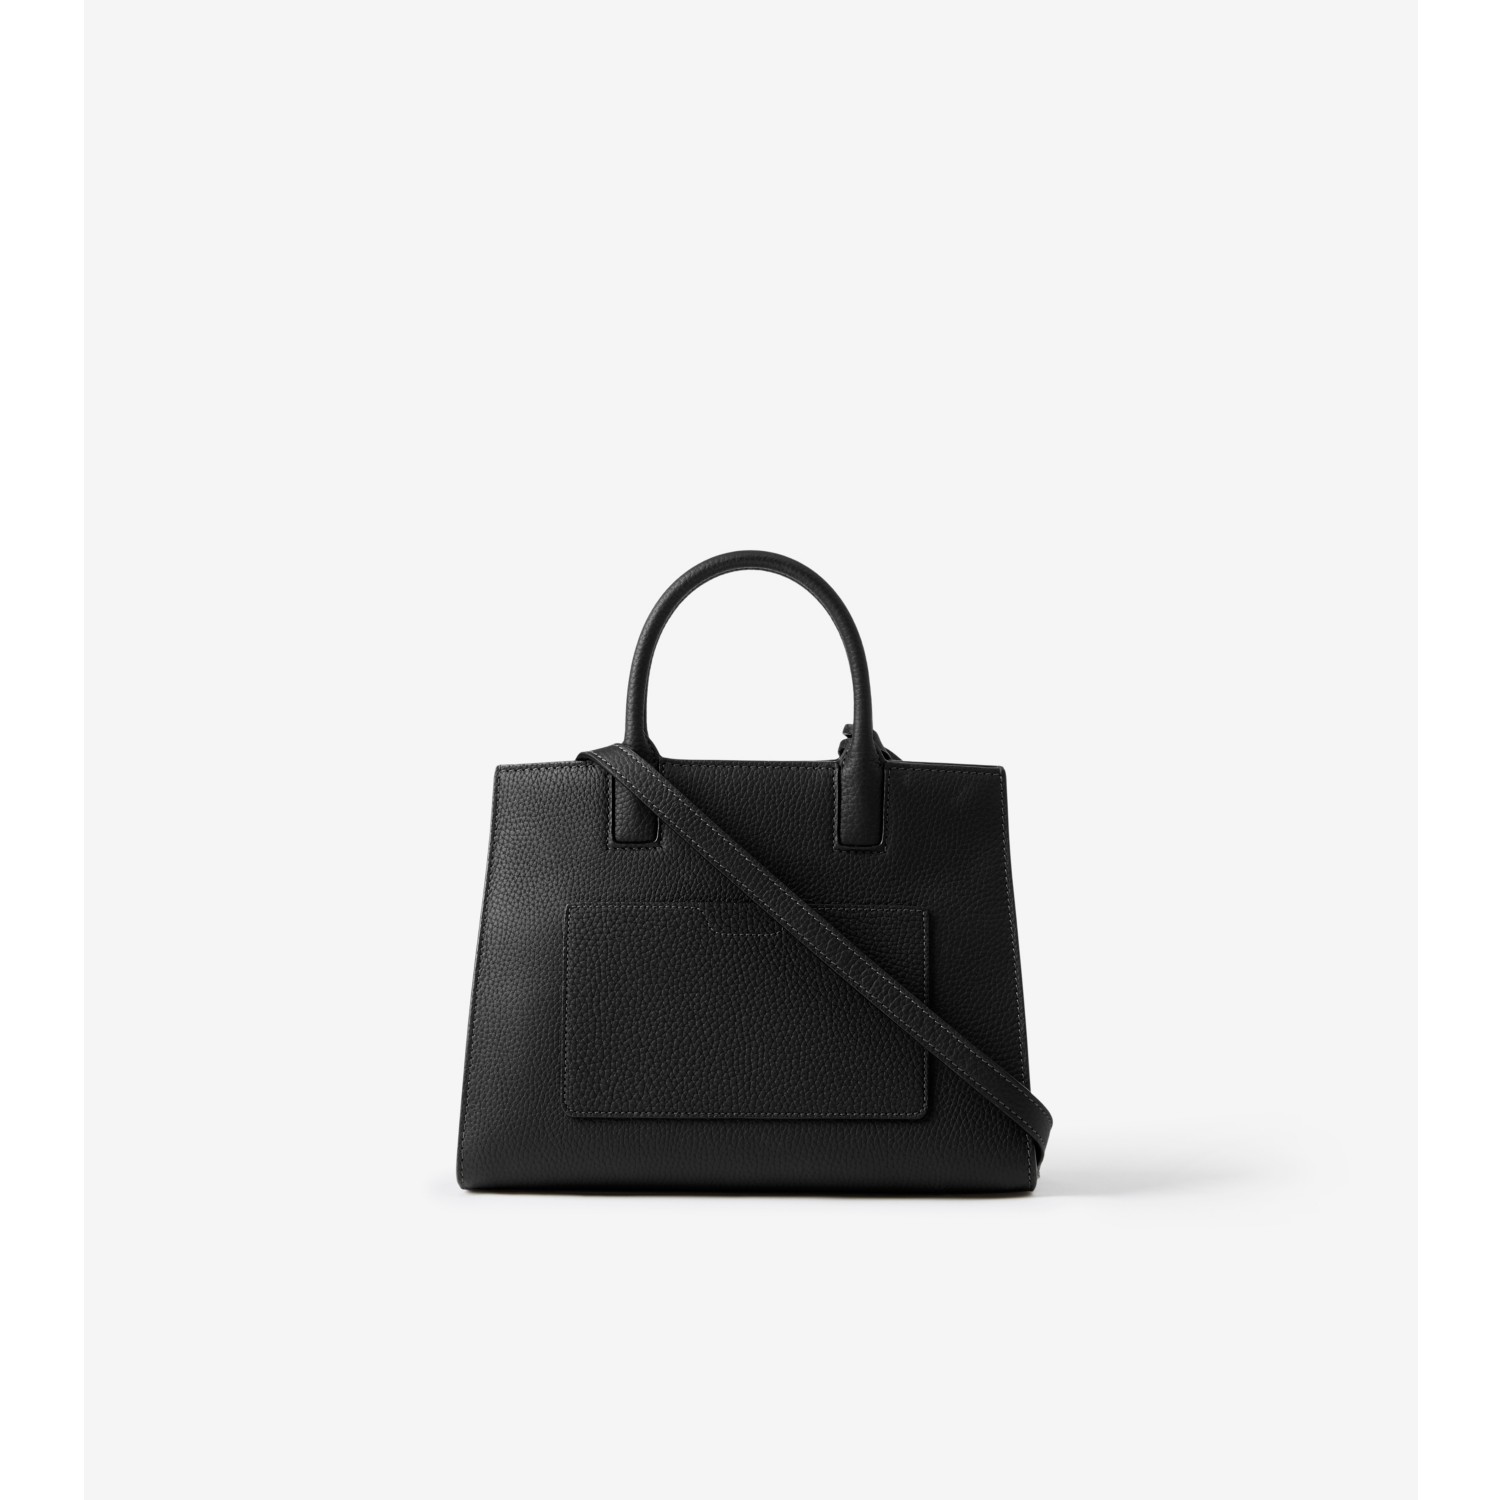 LOUIS VUITTON Authentic Gift Shopping Bag Small Orange SIZE 8.5” X